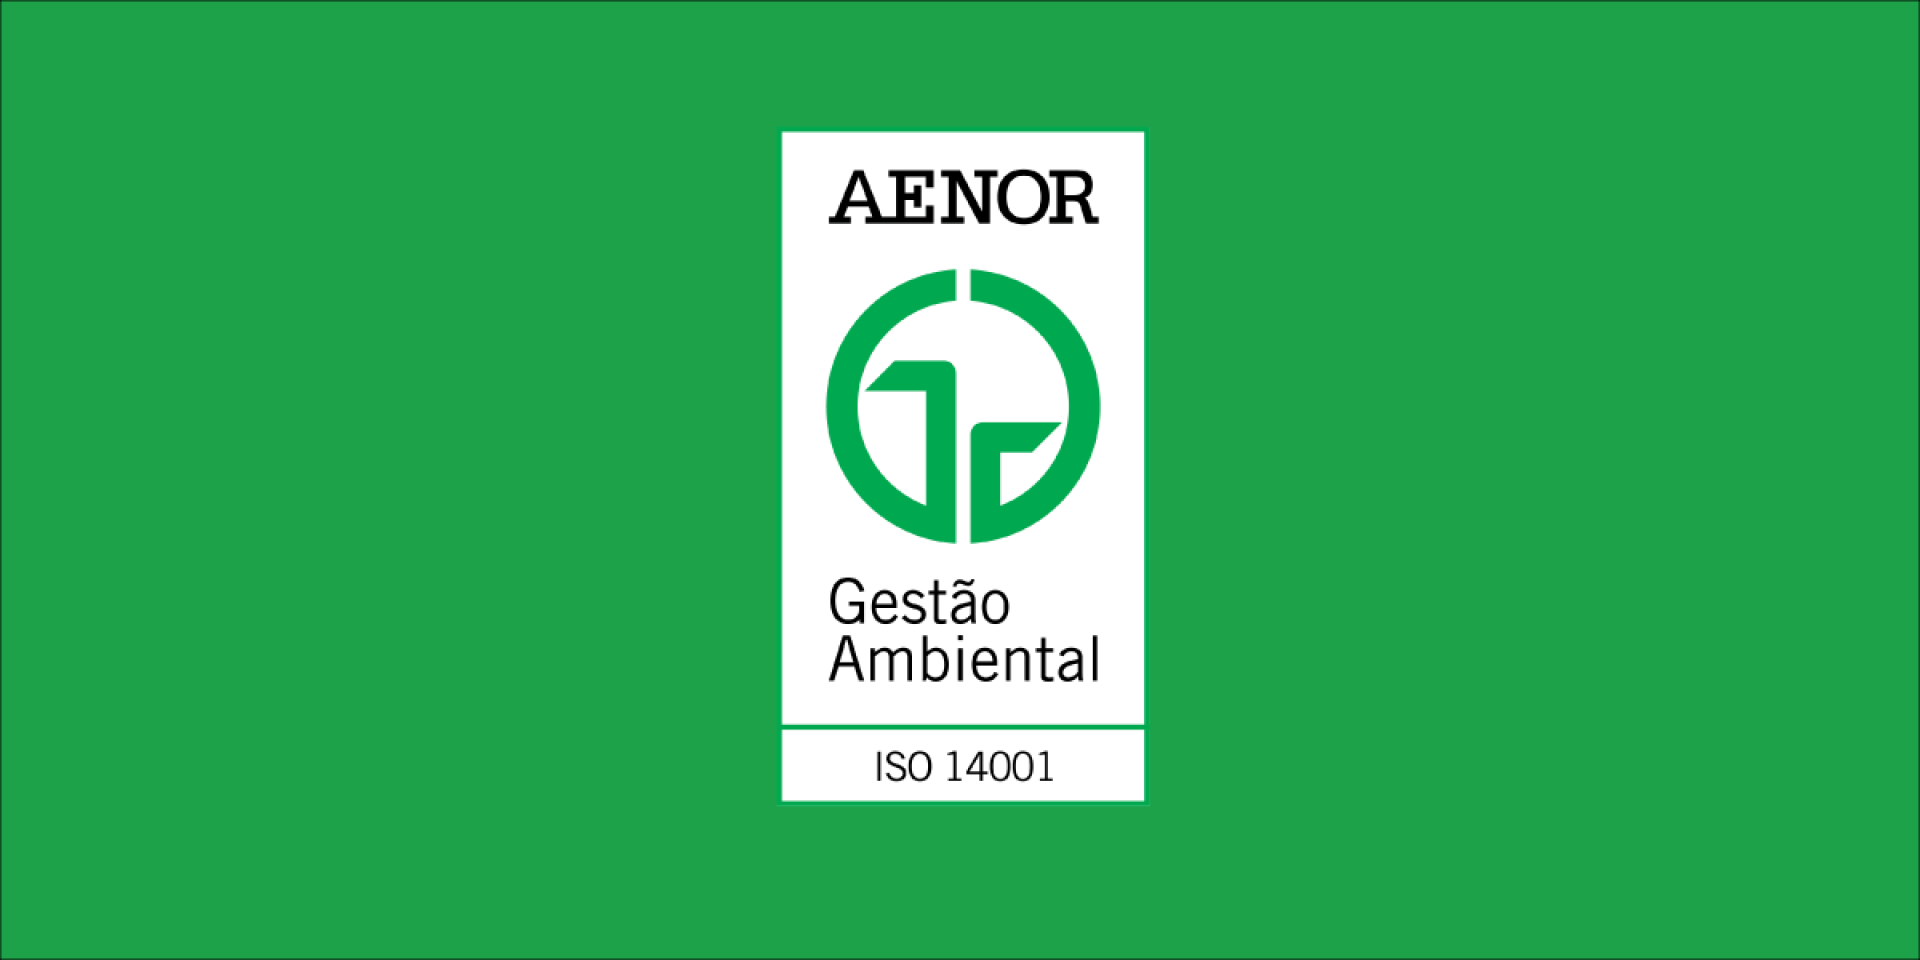 Award of Certification - ISO 14001:2015